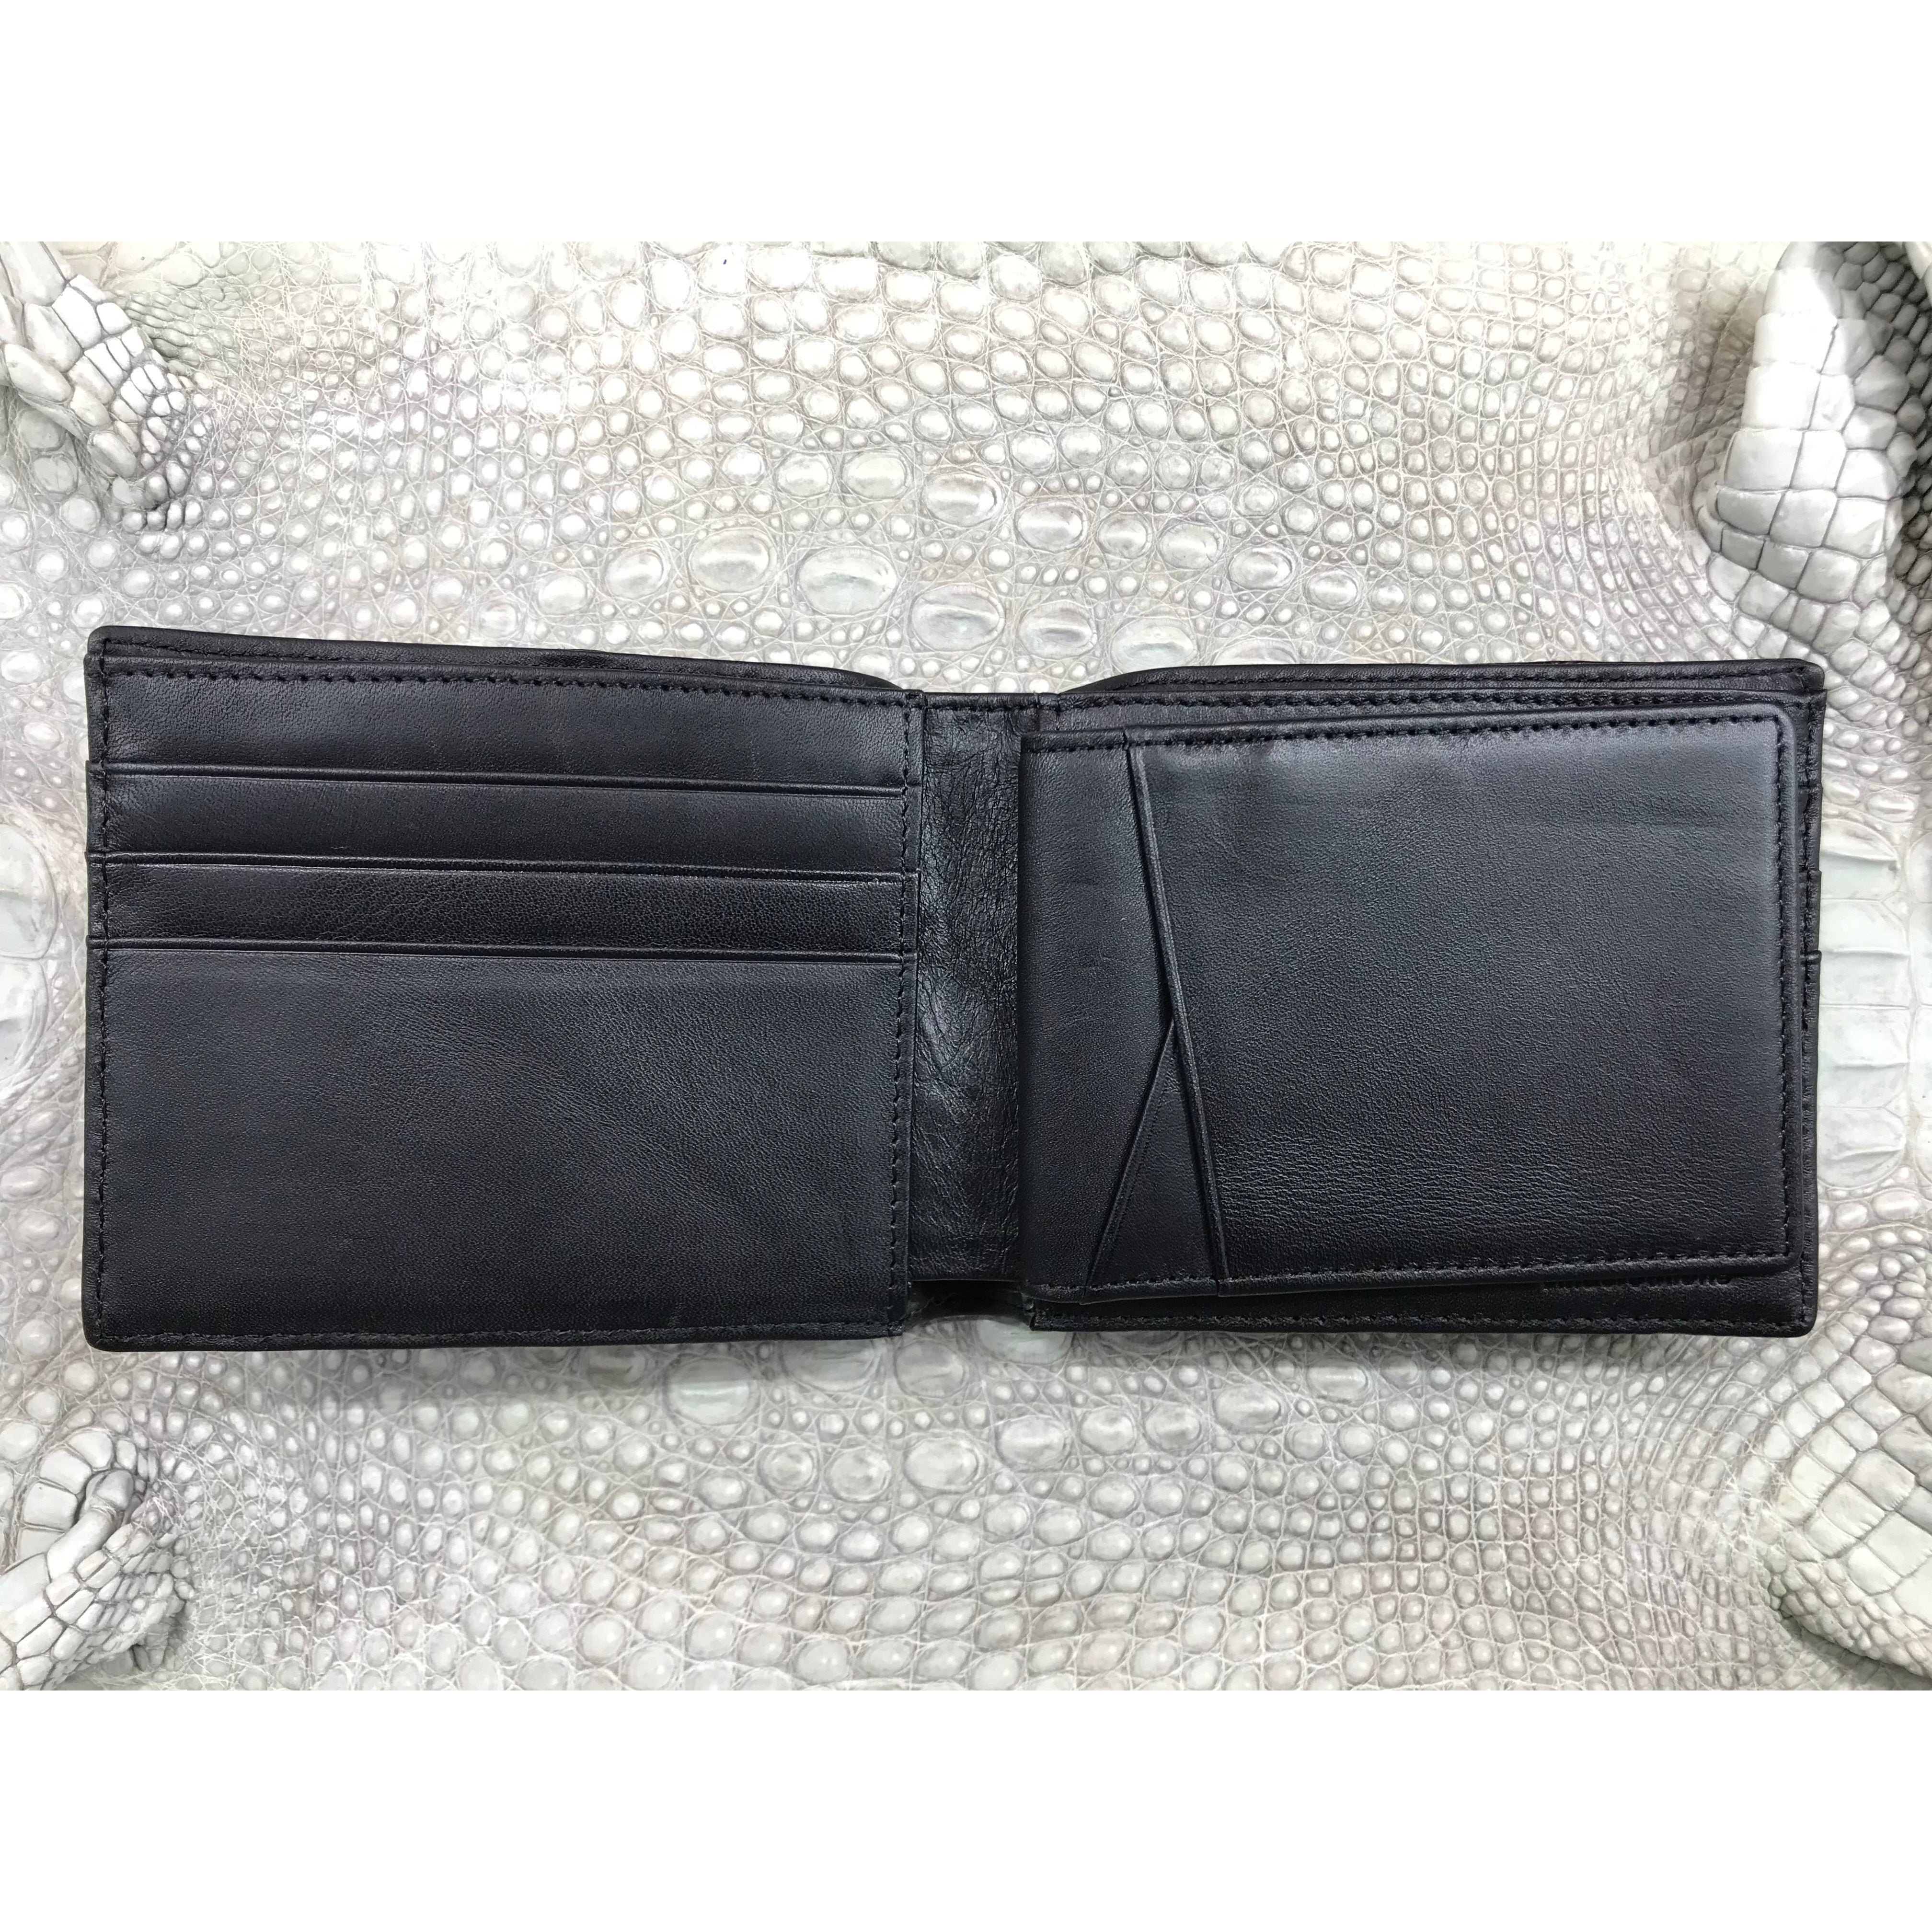 Black Alligator Skin Bifold Wallet For Men | Handmade Crocodile Leather Wallet RFID Blocking | VL5719 - Vinacreations